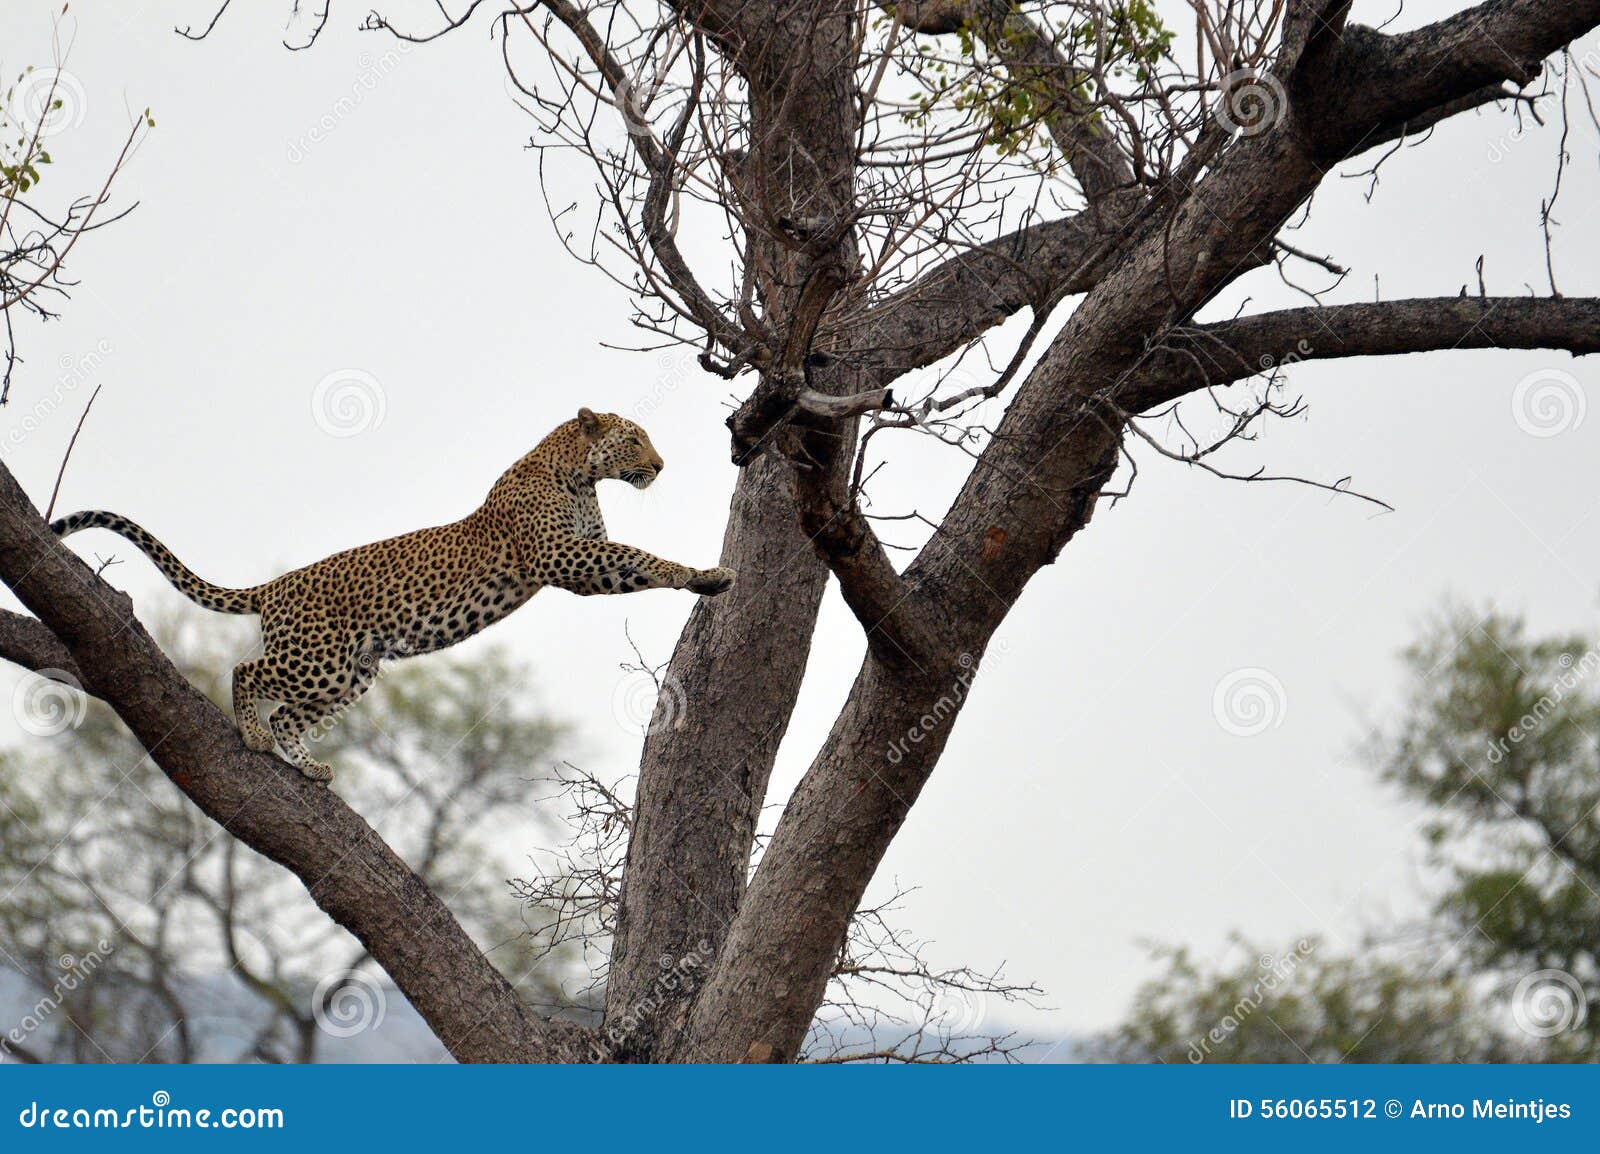 Leopard (Panthera Pardus) Jumping Stock Photo - Image: 56065512